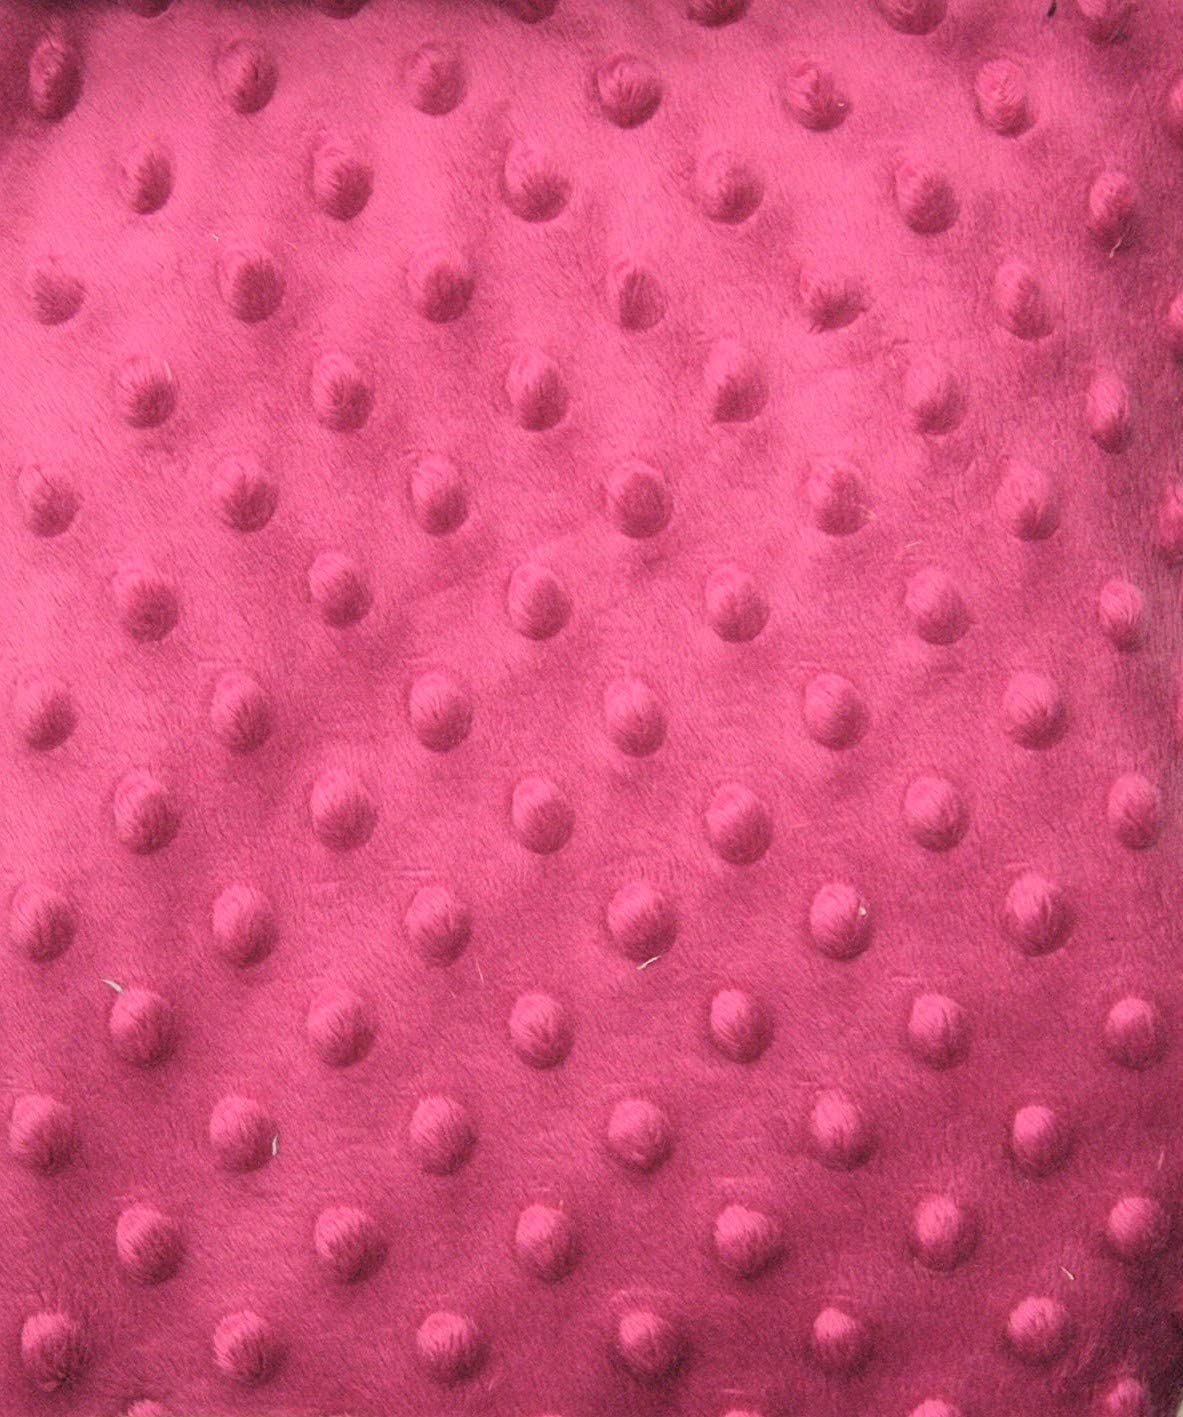 Minky Dimple Dot Soft Cuddle Fabric (Hot Pink, 1 Yard)